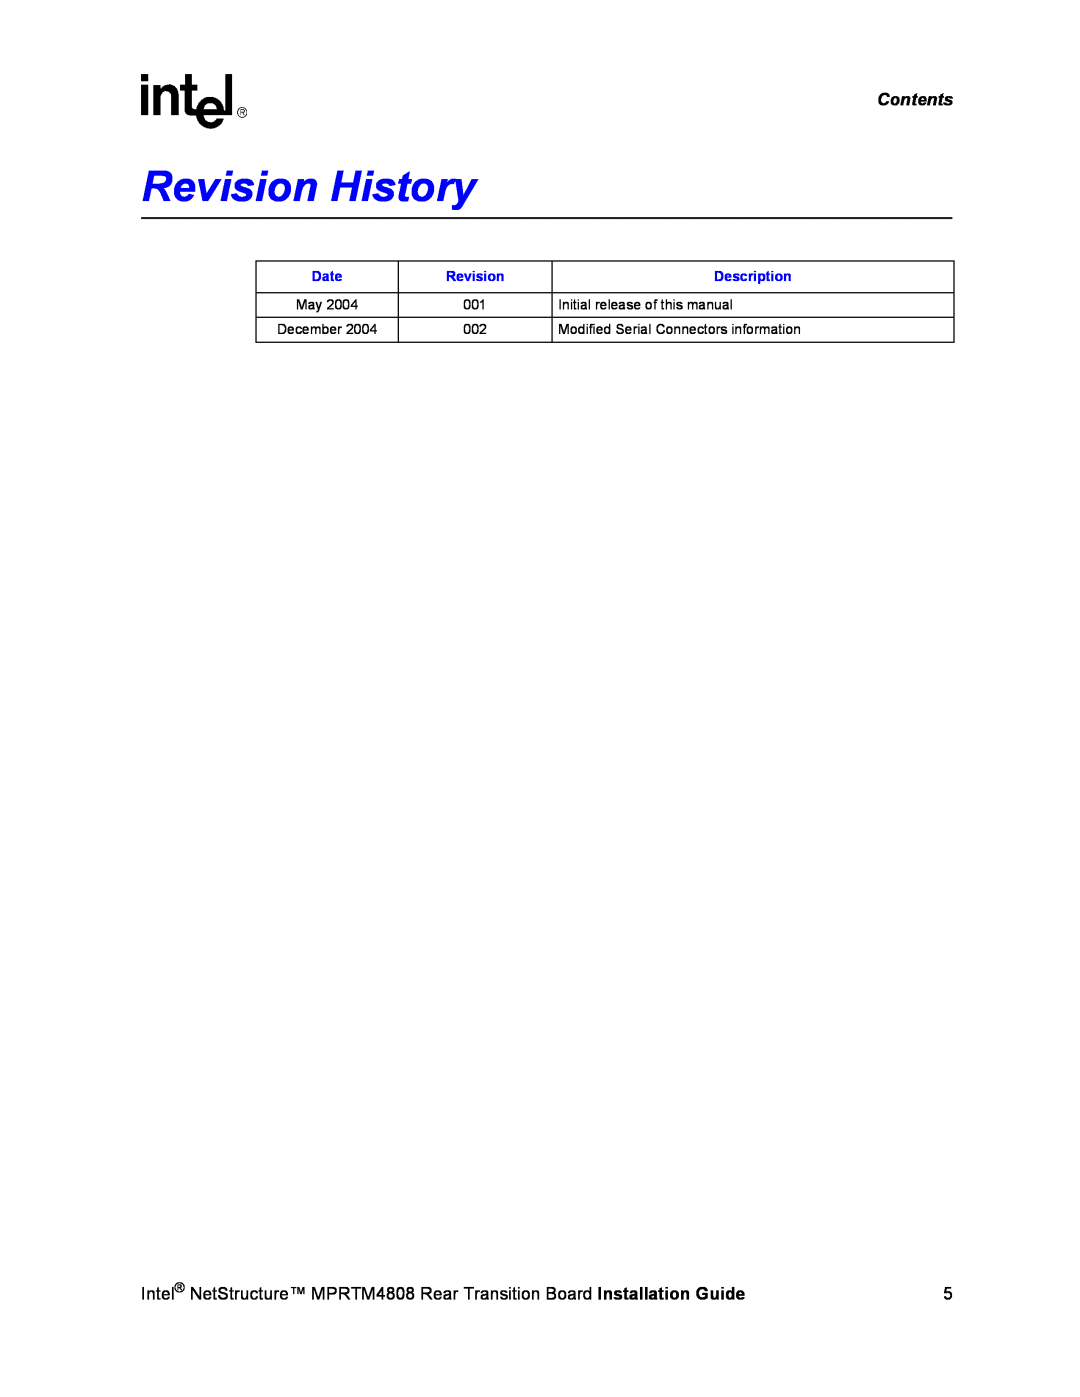 Intel MPRTM4808 manual Revision History, Contents, Date, Description 